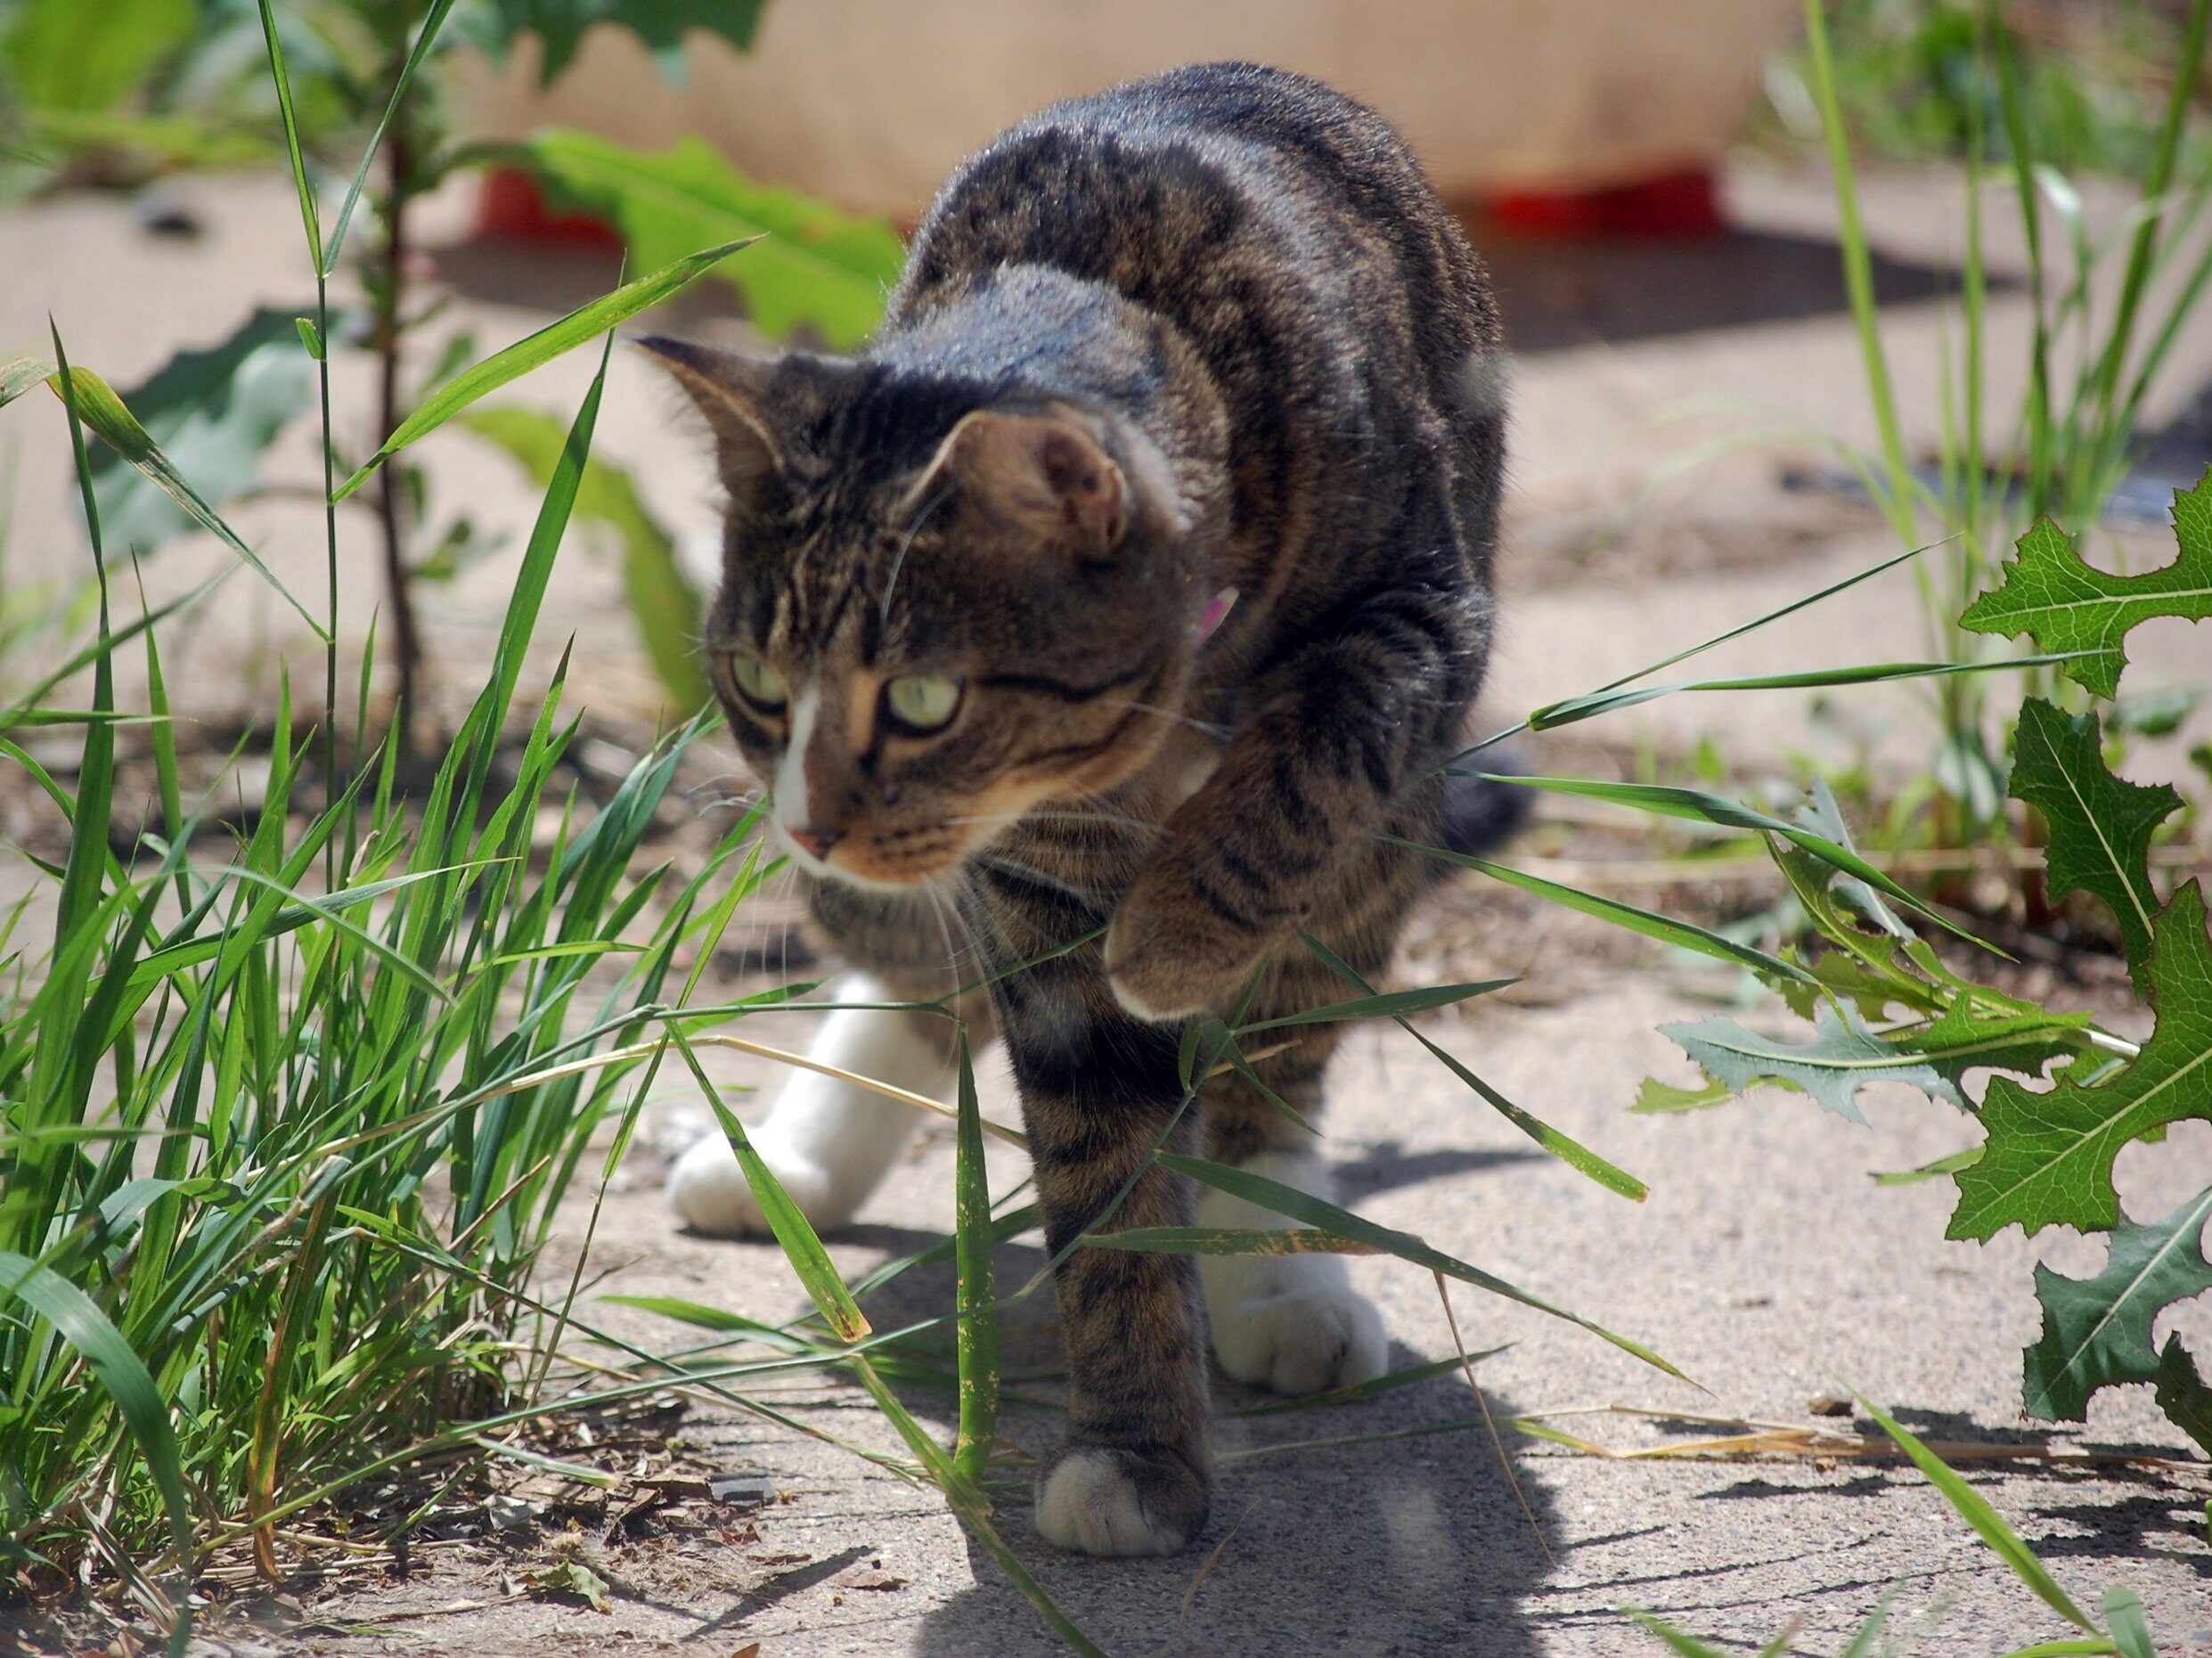 A cat hunting. Image credit: Sreejithk2000 (Wikimedia Commons).